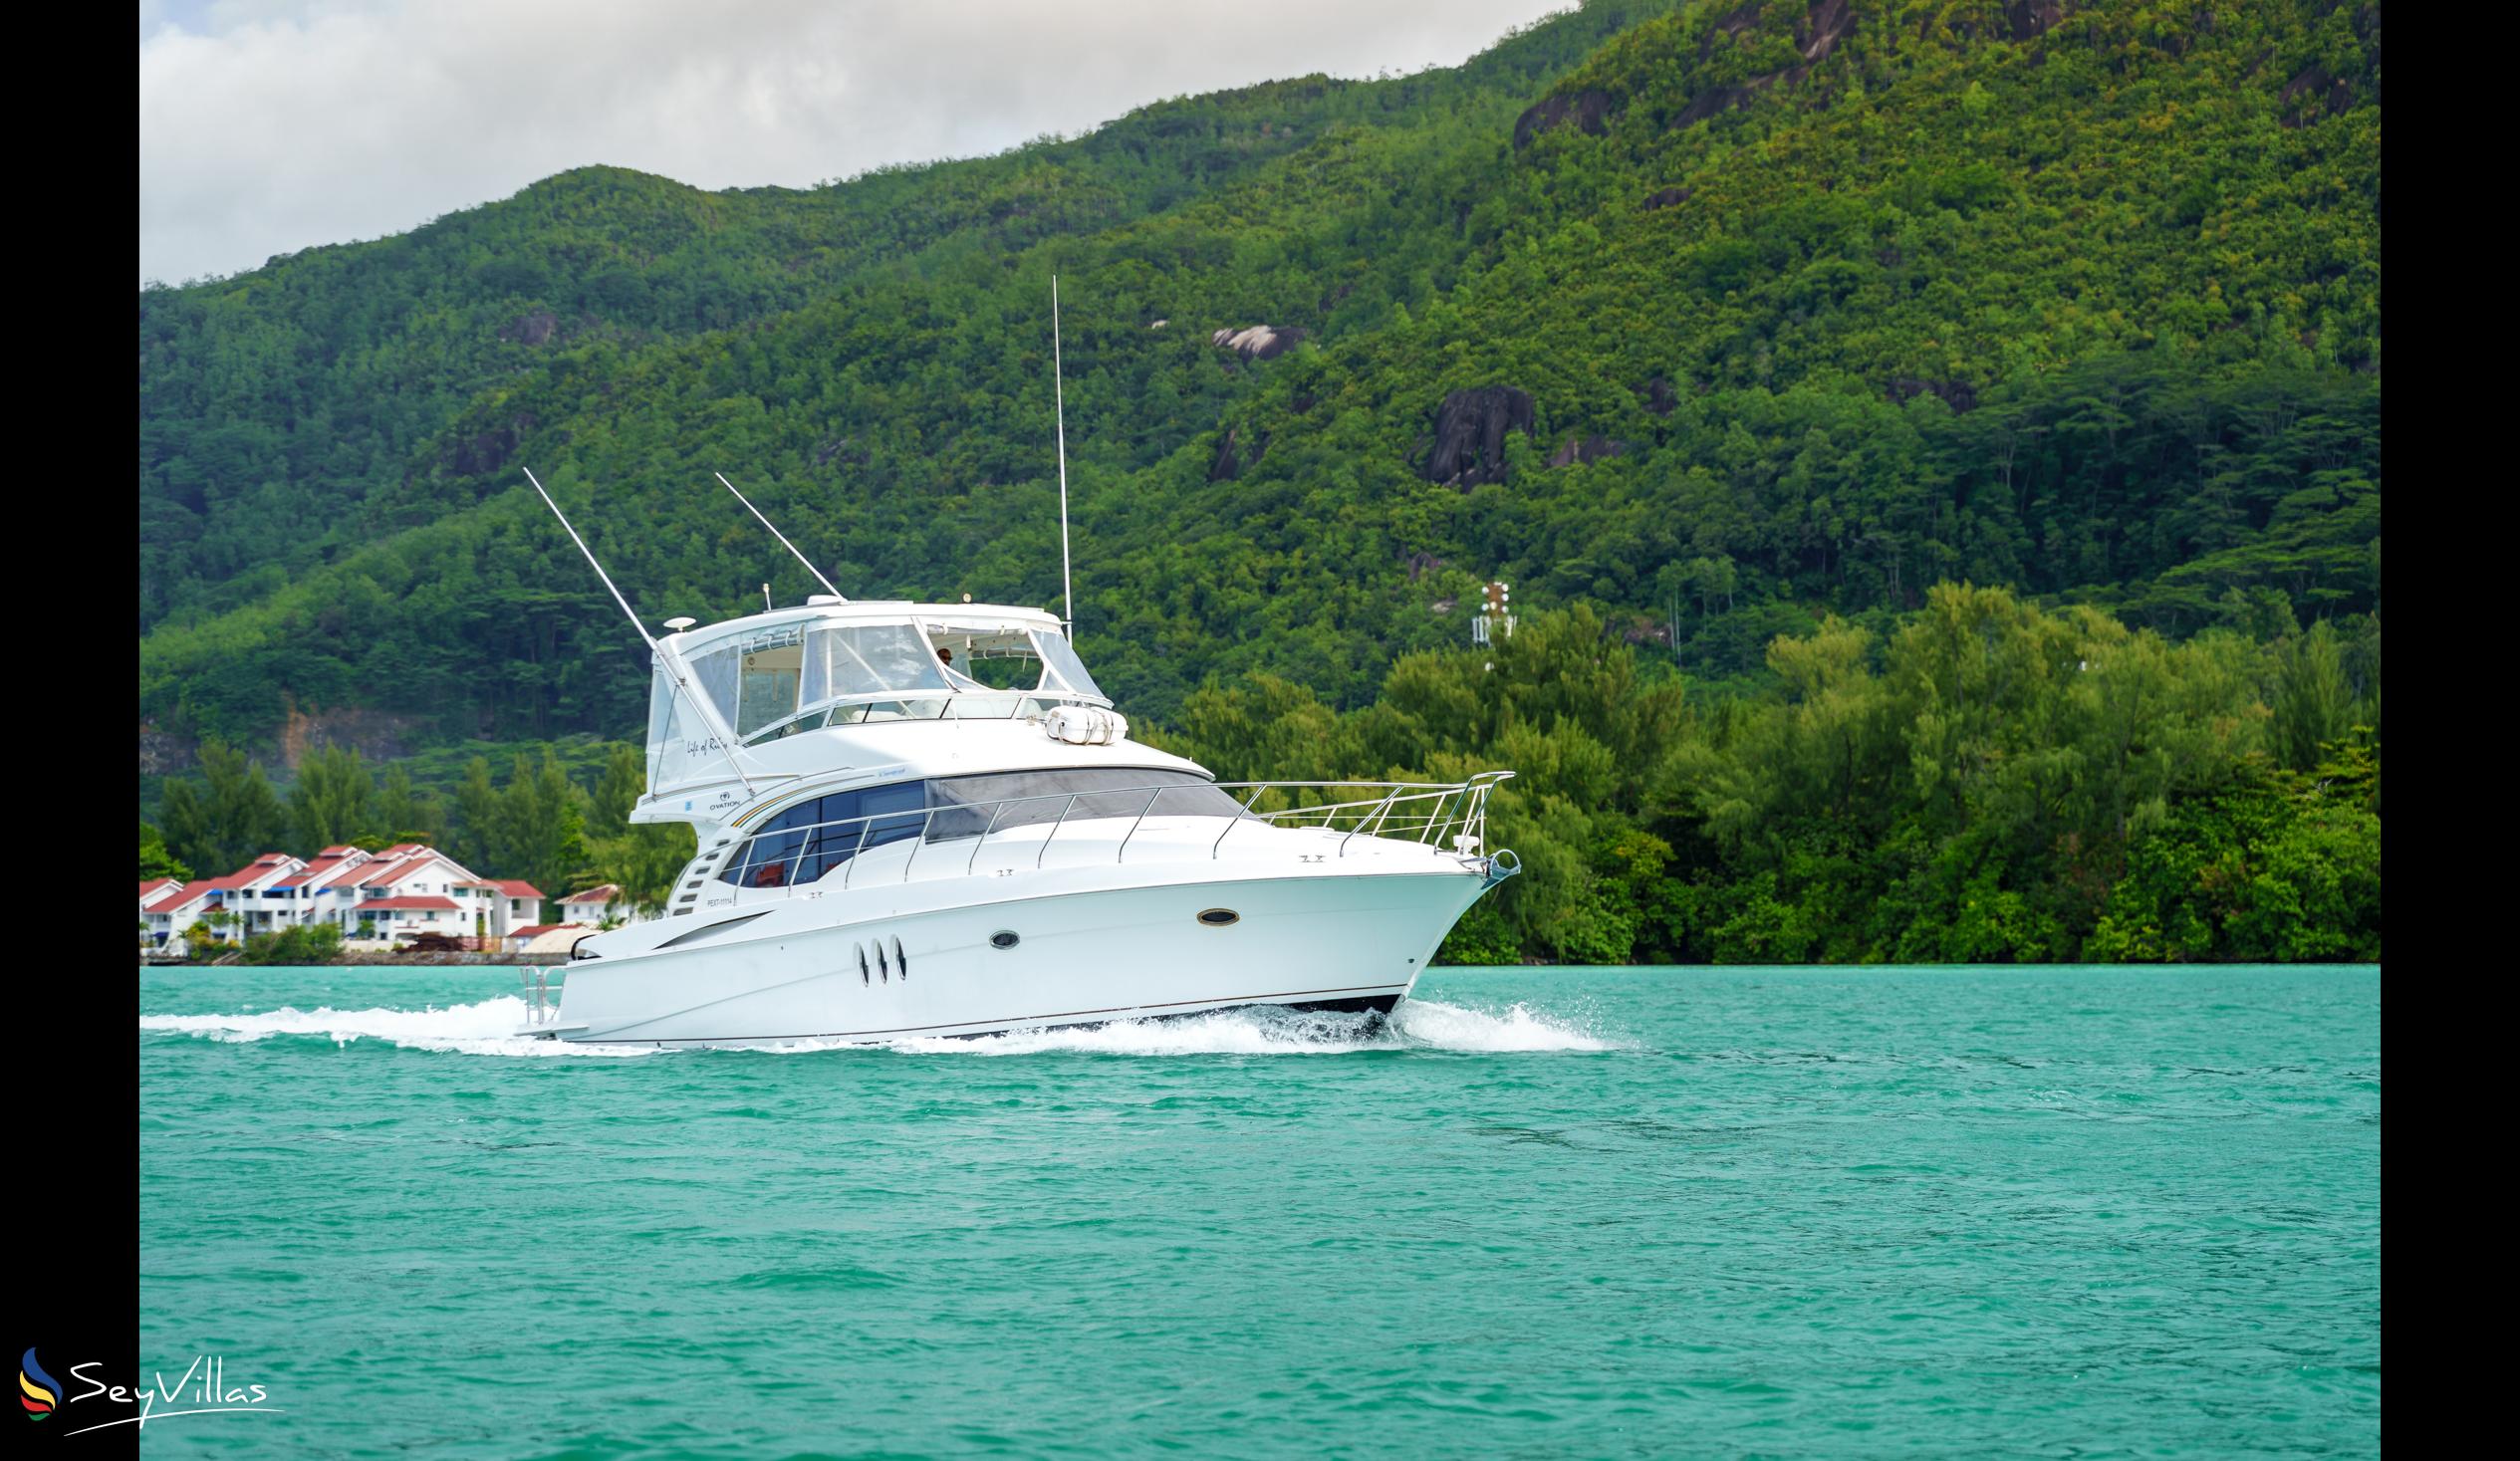 Foto 10: Seyscapes Yacht Charter - Aussenbereich - Seychellen (Seychellen)